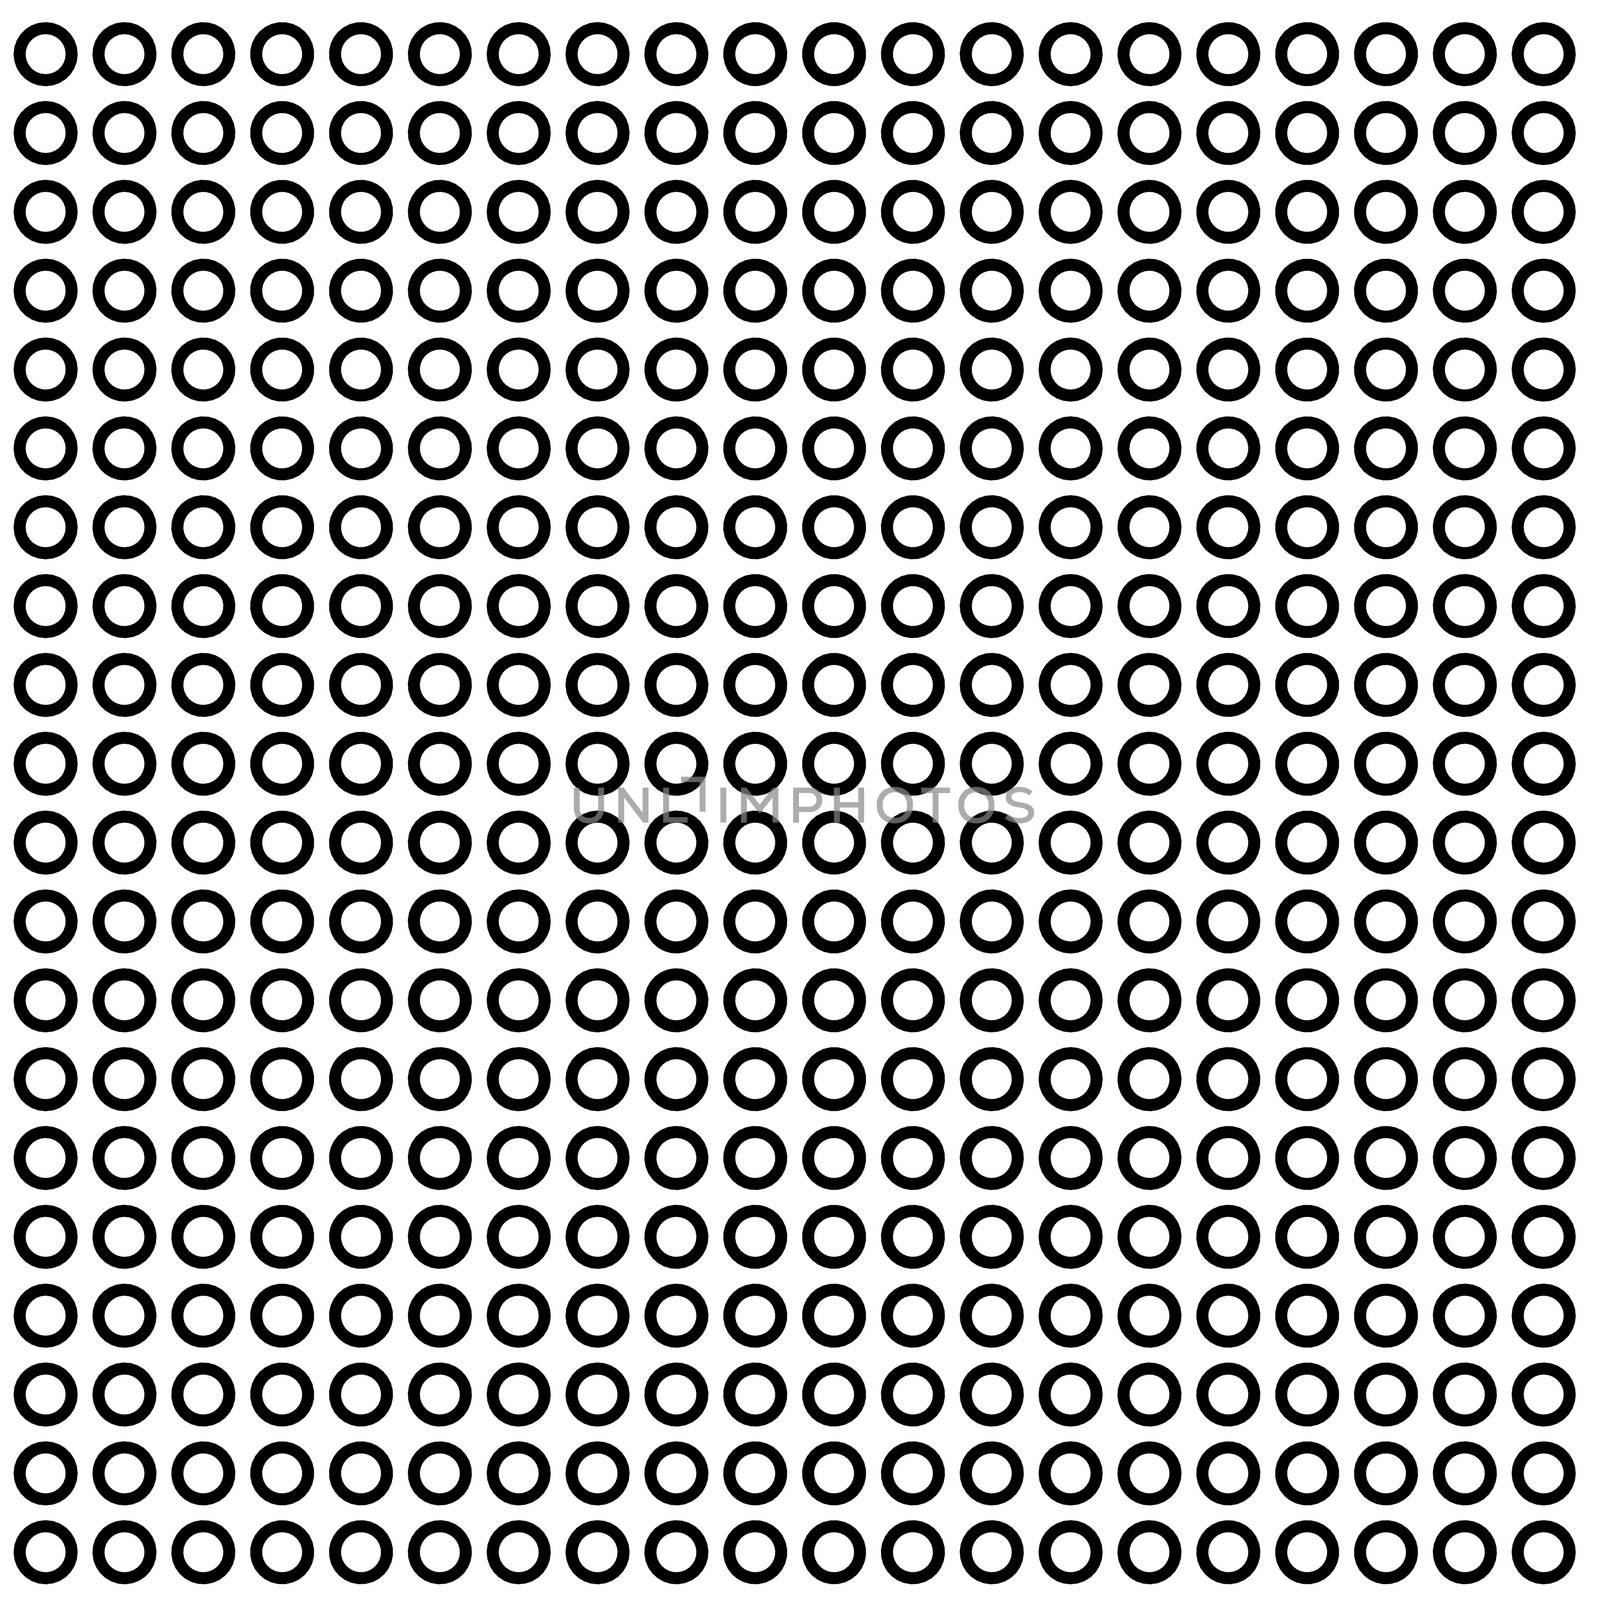 circle pattern by chrisroll